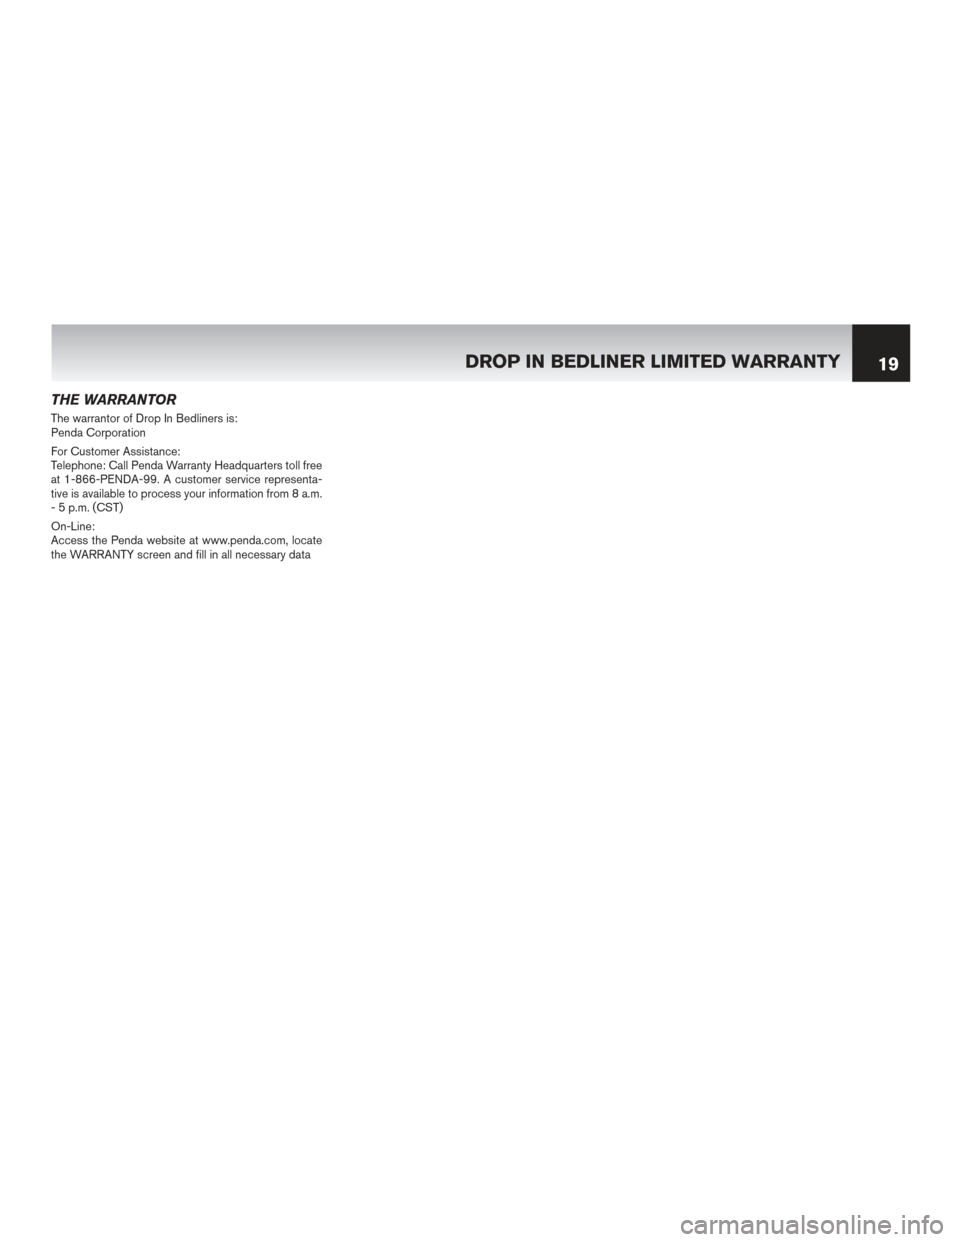 NISSAN SENTRA 2014 B17 / 7.G Warranty Booklet THE WARRANTOR
The warrantor of Drop In Bedliners is:
Penda Corporation
For Customer Assistance:
Telephone: Call Penda Warranty Headquarters toll free
at 1-866-PENDA-99. A customer service representa-
